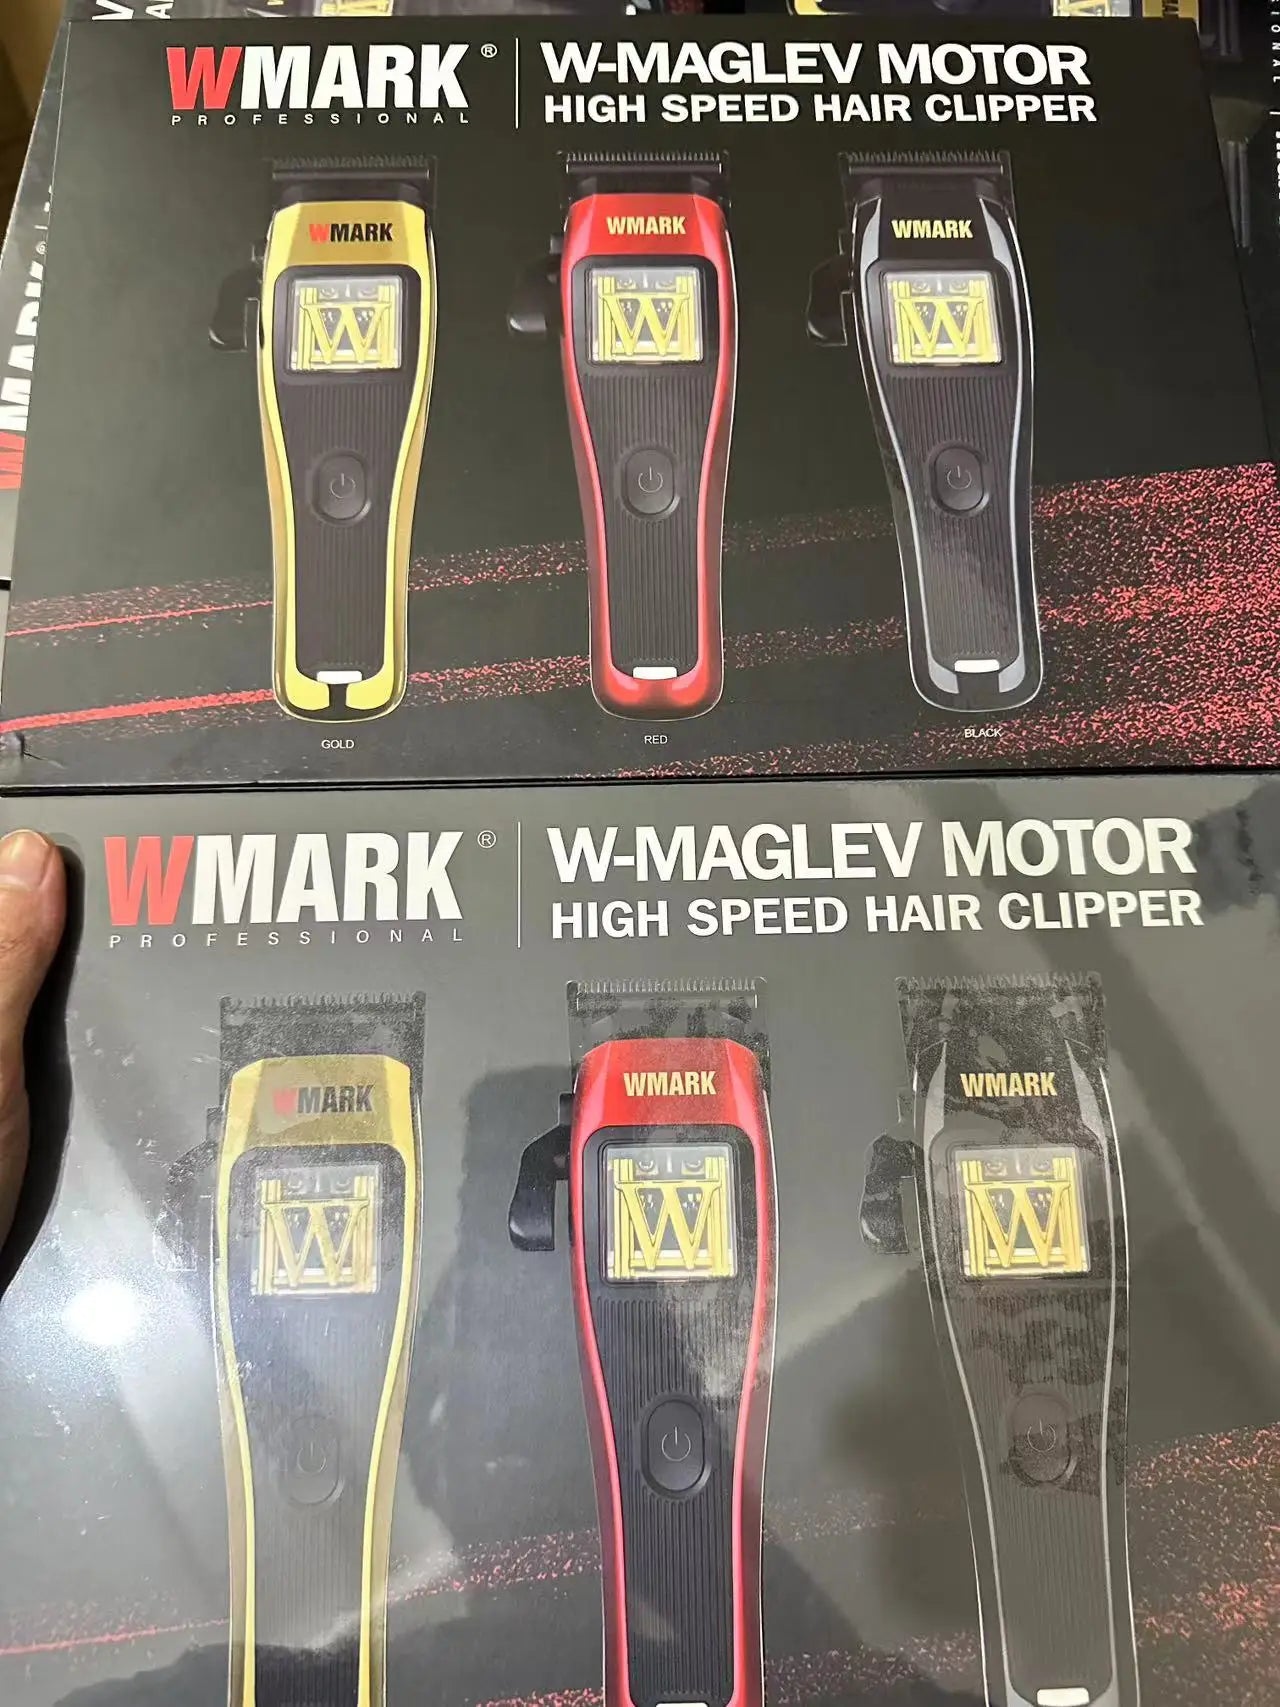 WMARK's new NG-X1 Men's hair clipper 10000 RPM